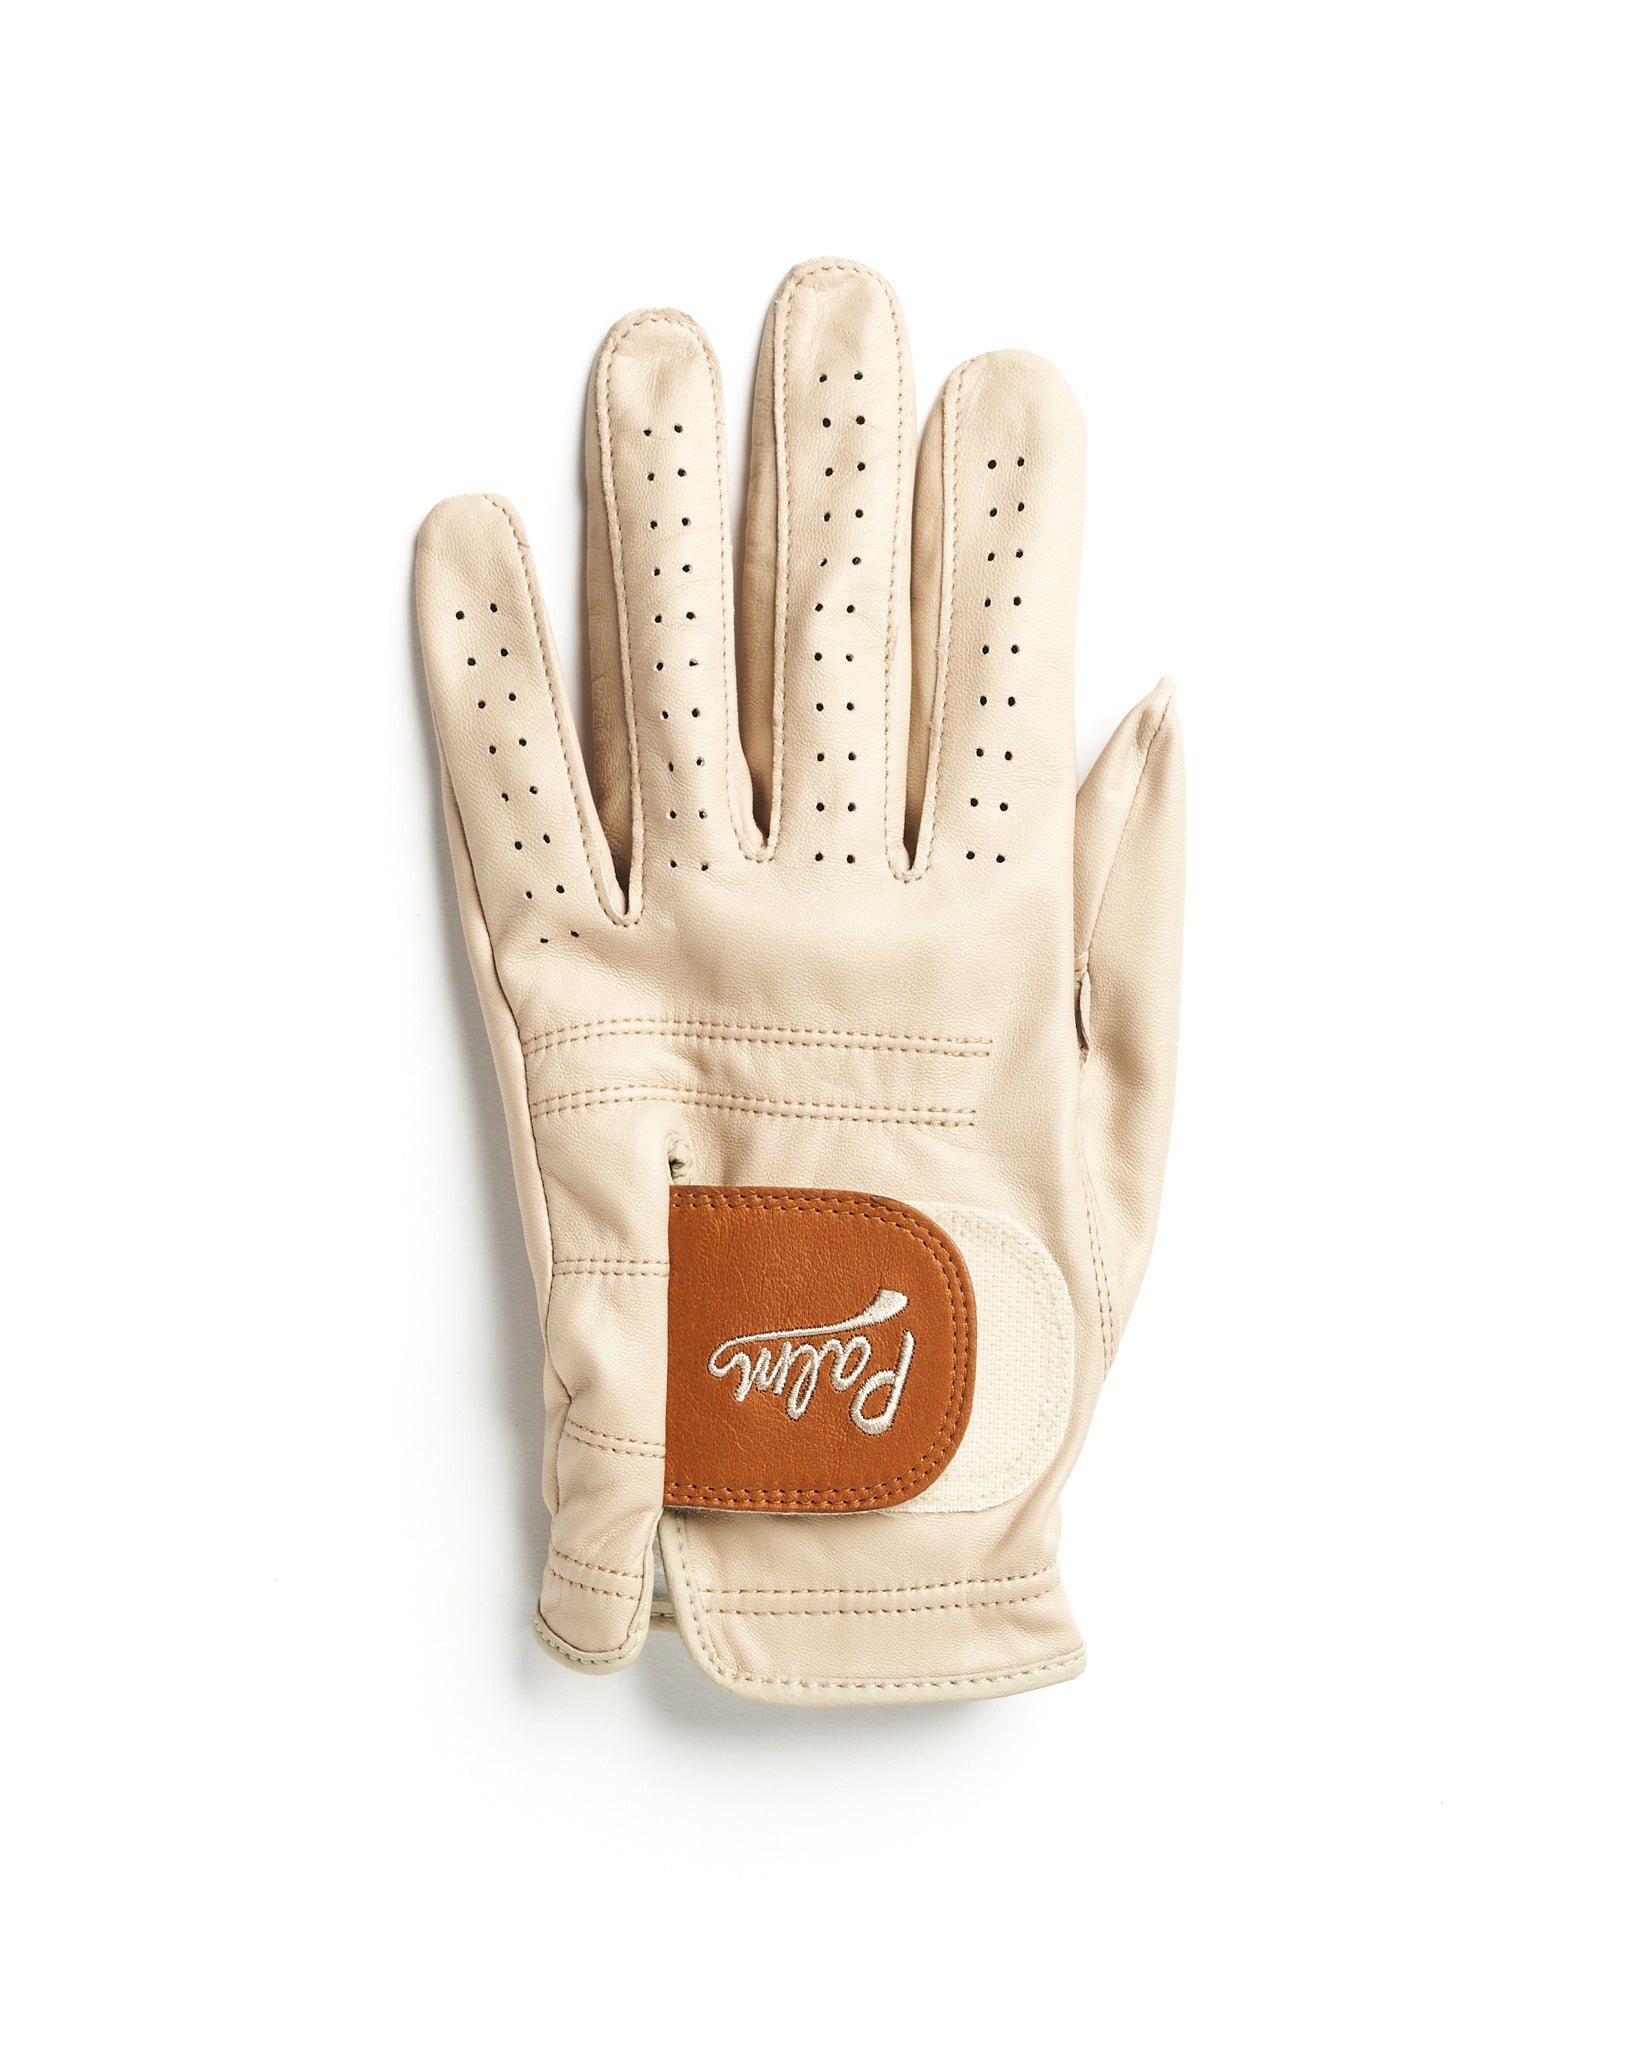 Palm Golf Co. Men's Draper Glove